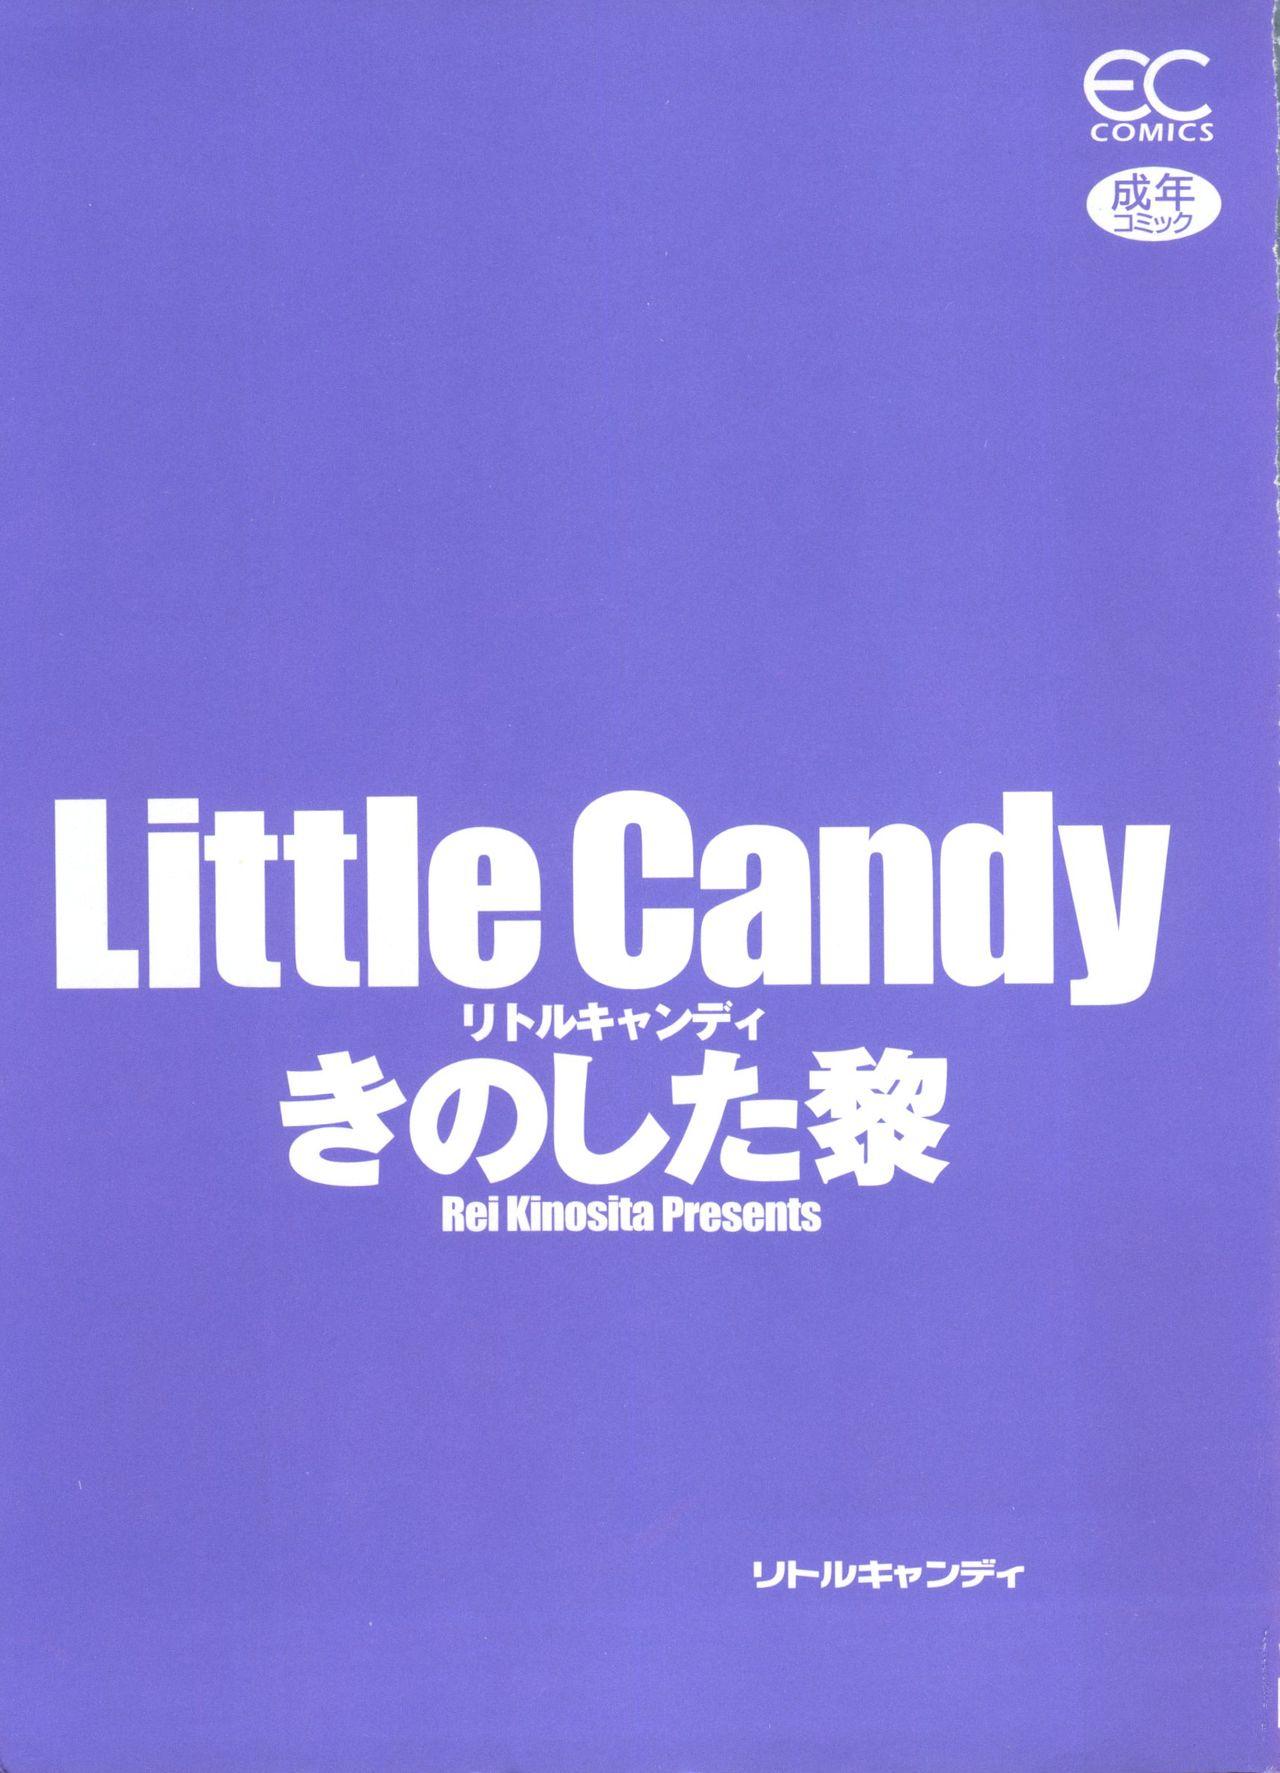 Little Candy 3